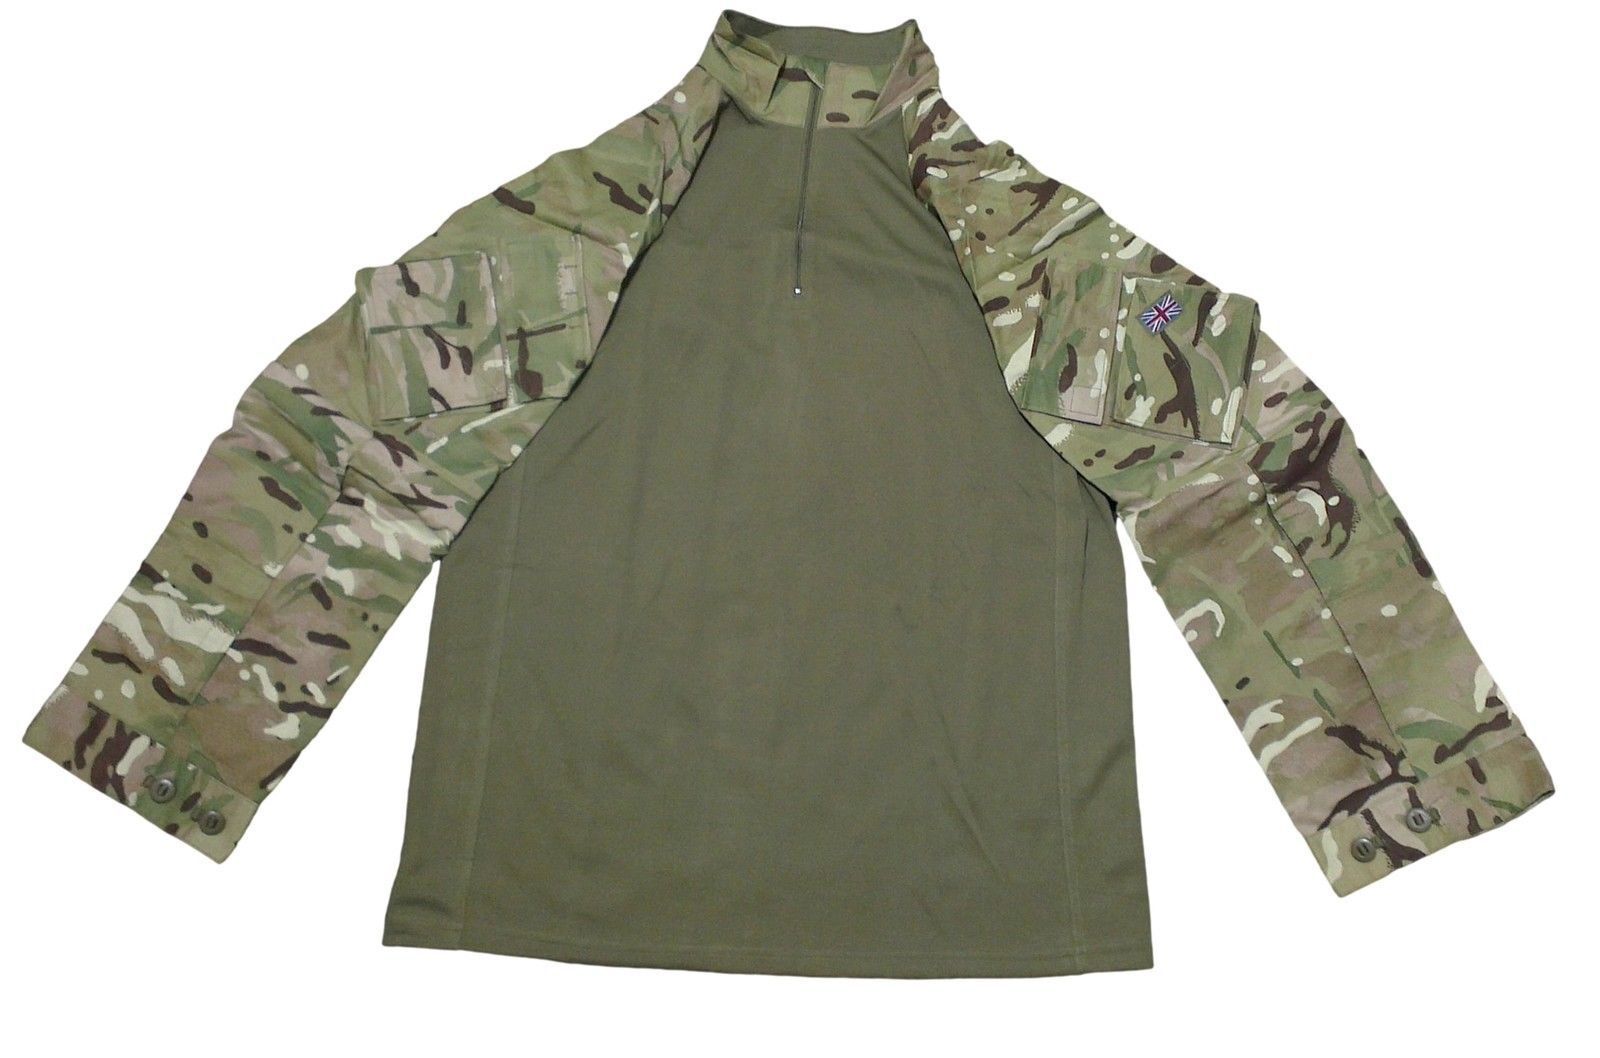 British Army MTP UBAC Shirt / Top Under Body Armour Combat Shirt NEW L / XL